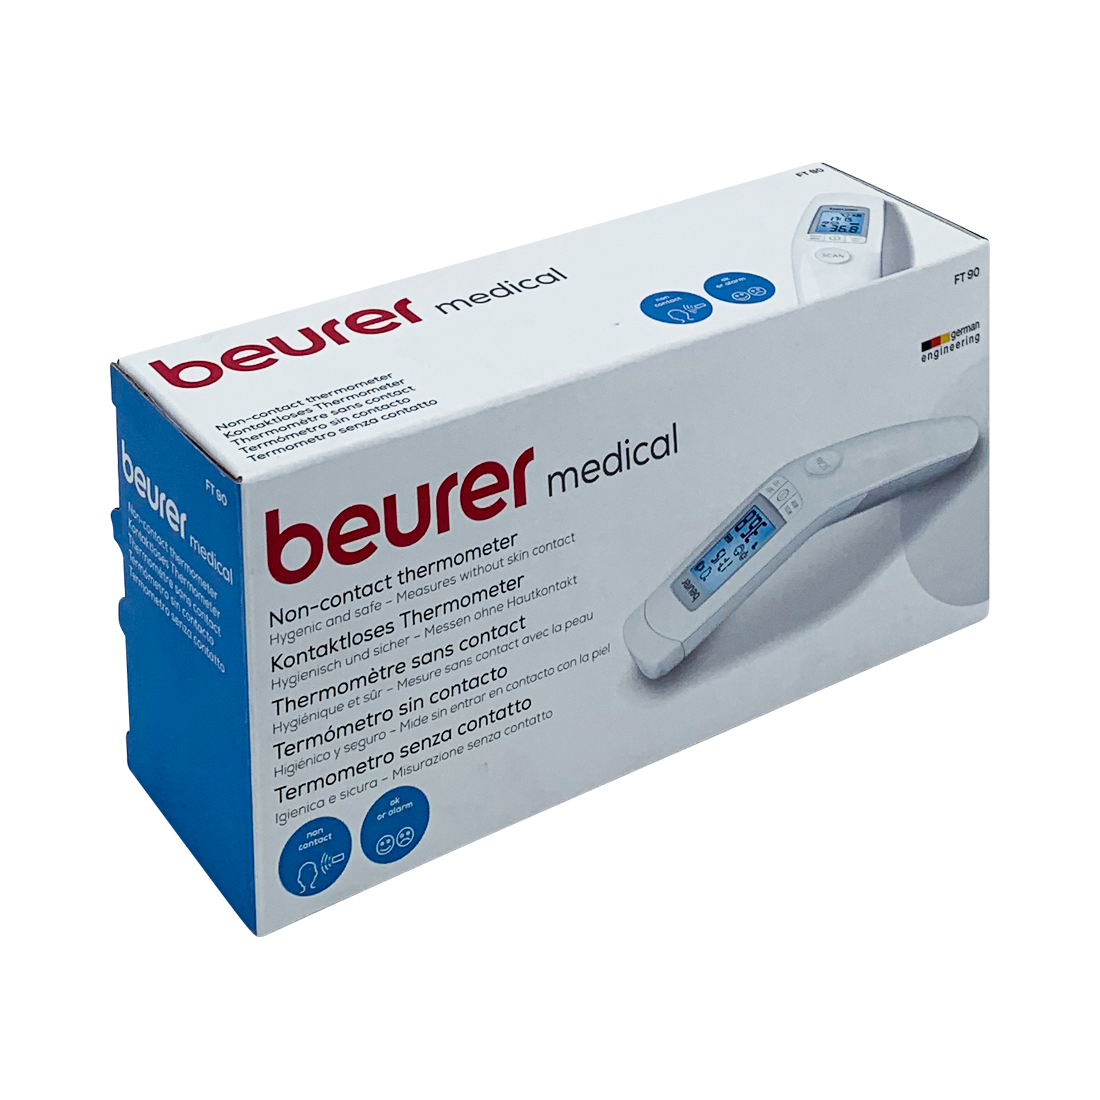 Beurer Kontaktloses Infrarot-Fieberthermometer, FT90, 1 Stück, Weiß 